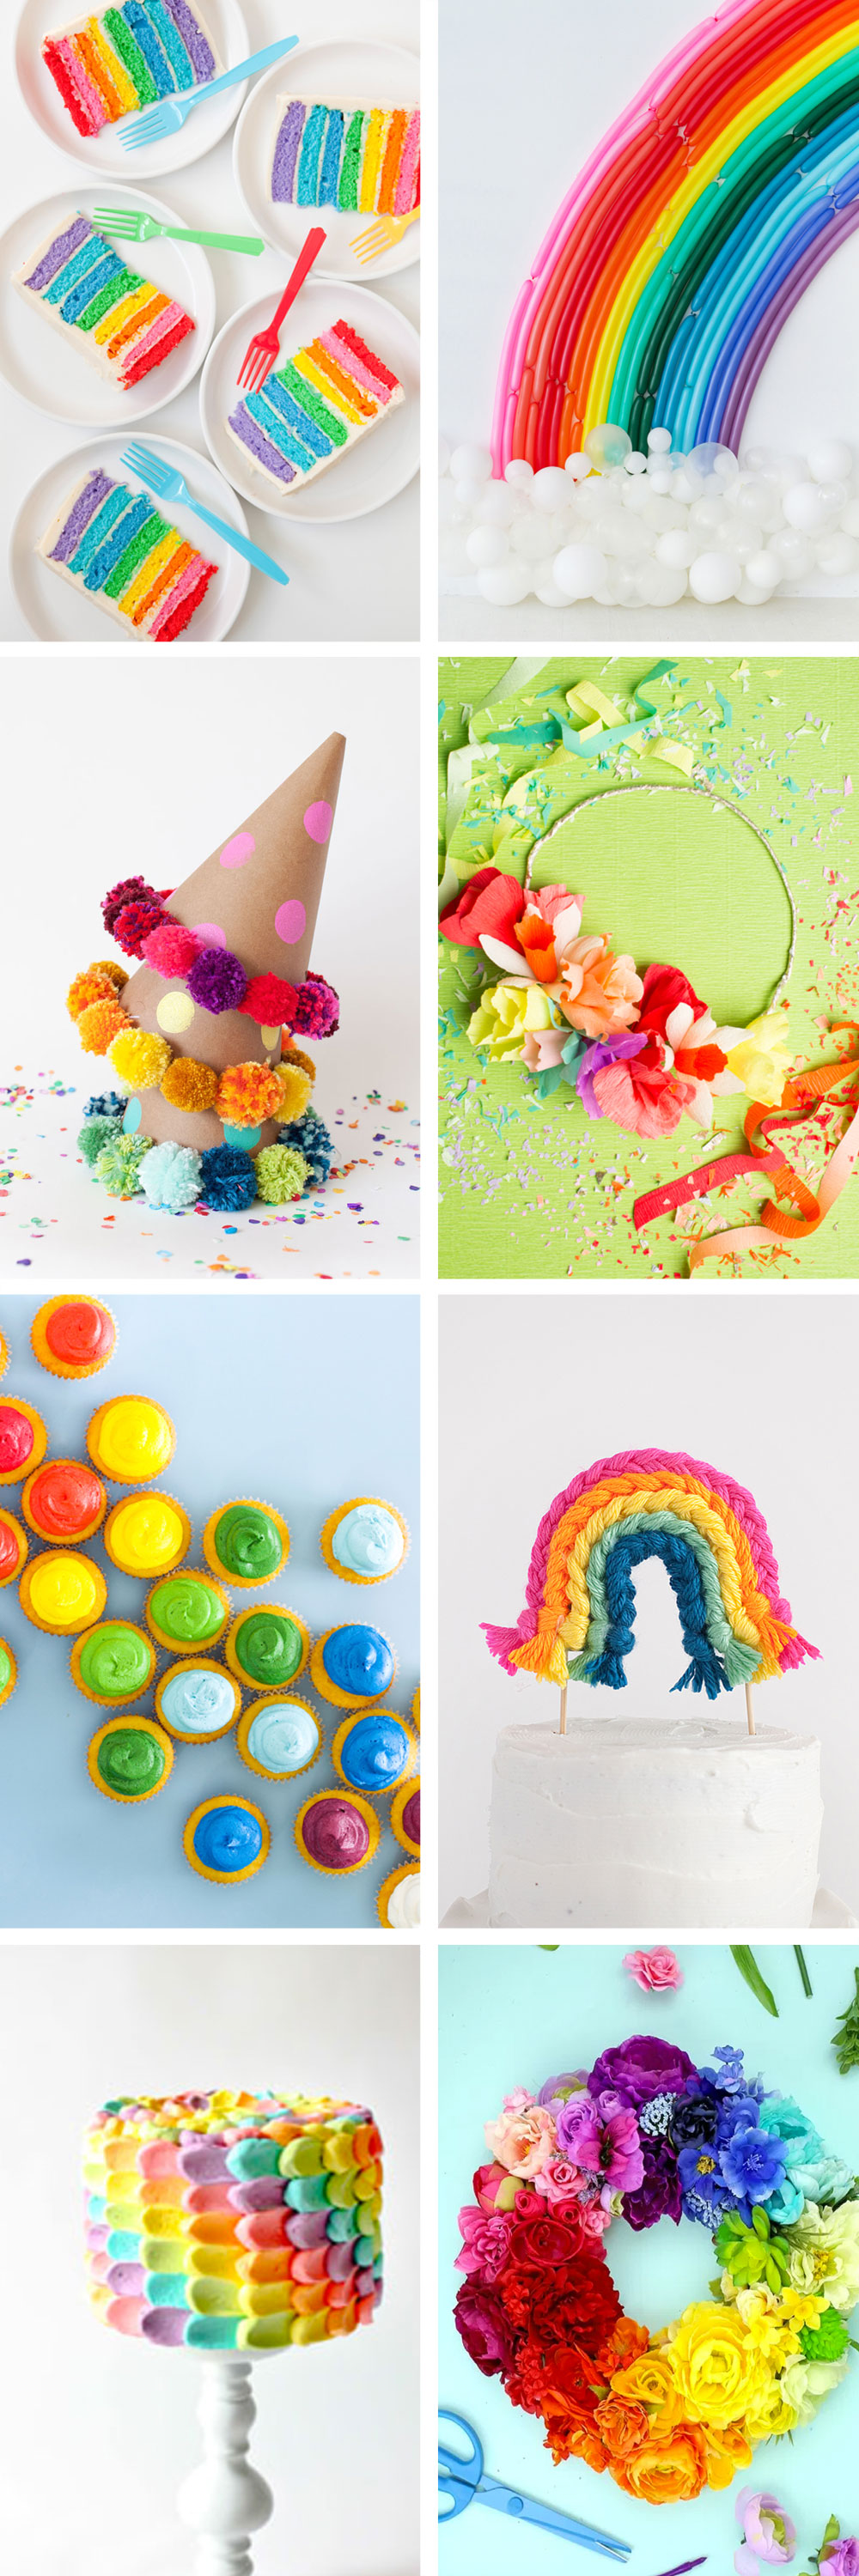 Rainbow-diy-crafts-and-treats